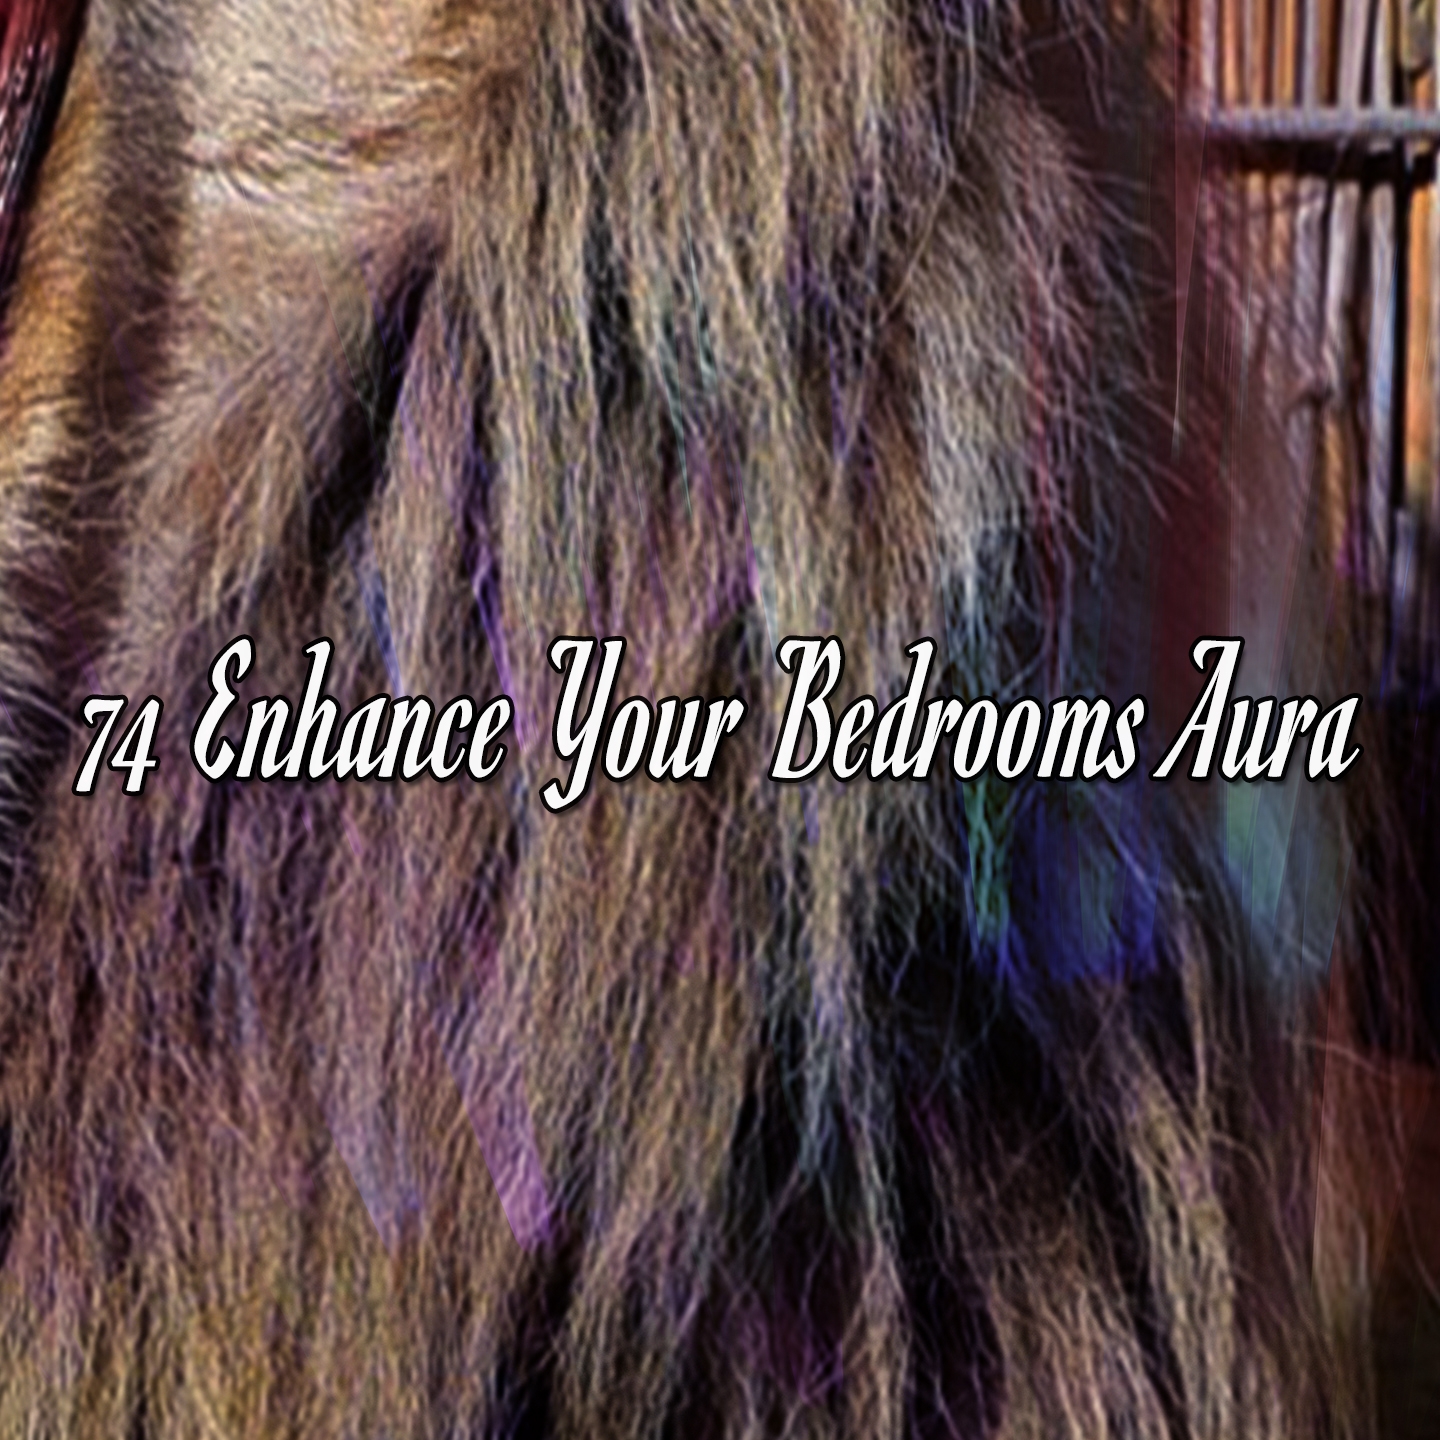 74 Enhance Your Bedrooms Aura